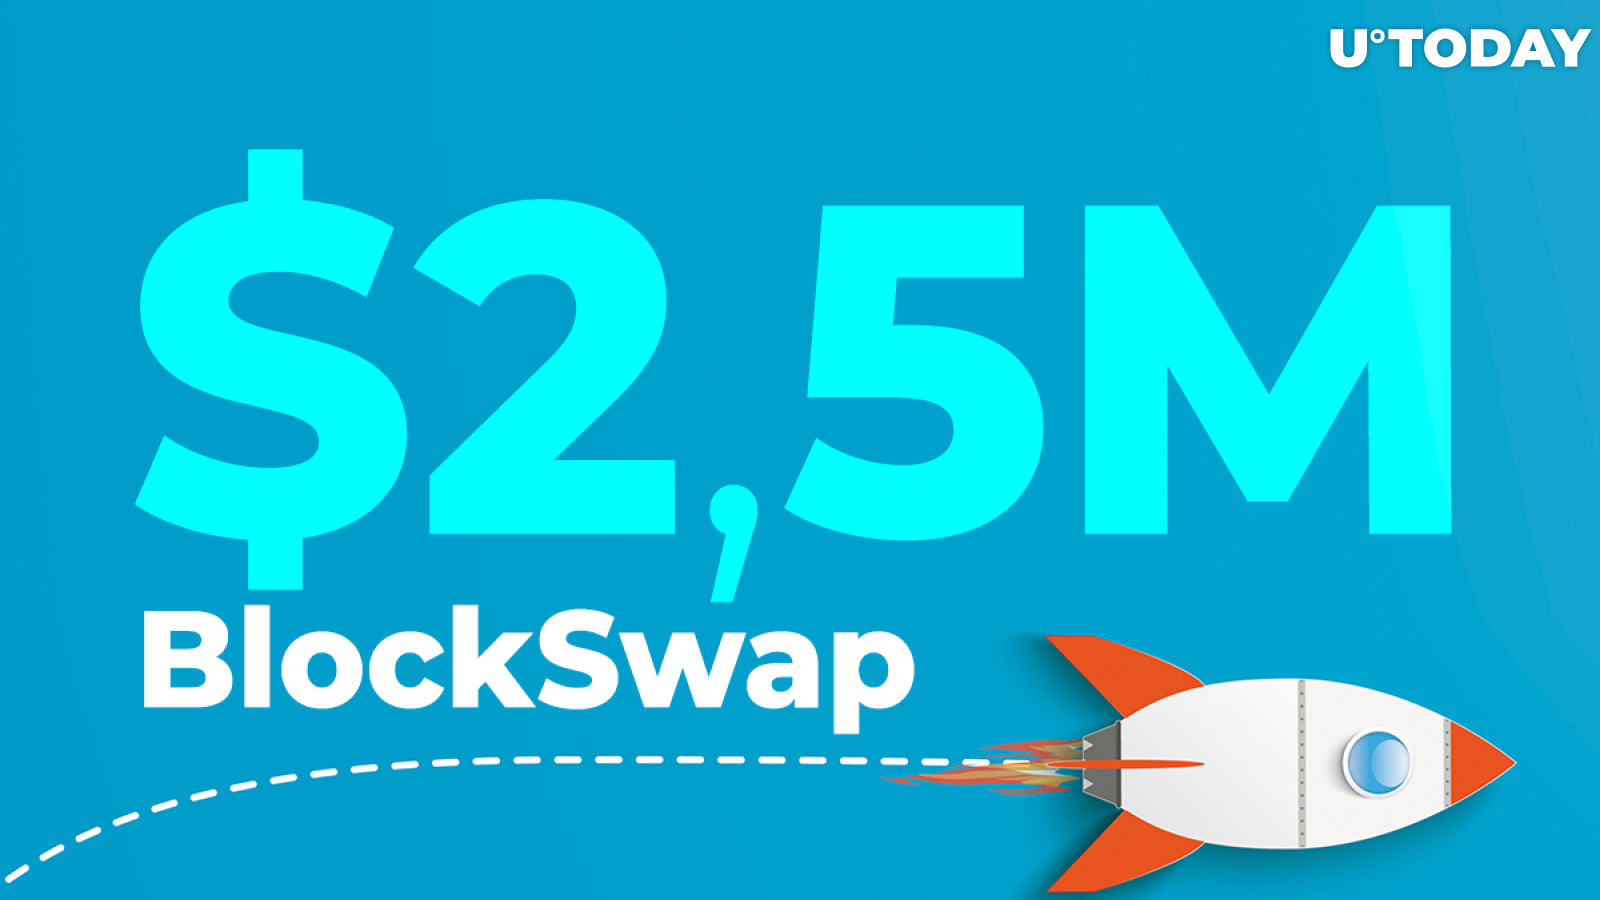 BlockSwap Network DeFi Startup Closes Its Funding Round with $2.5 Million Raised